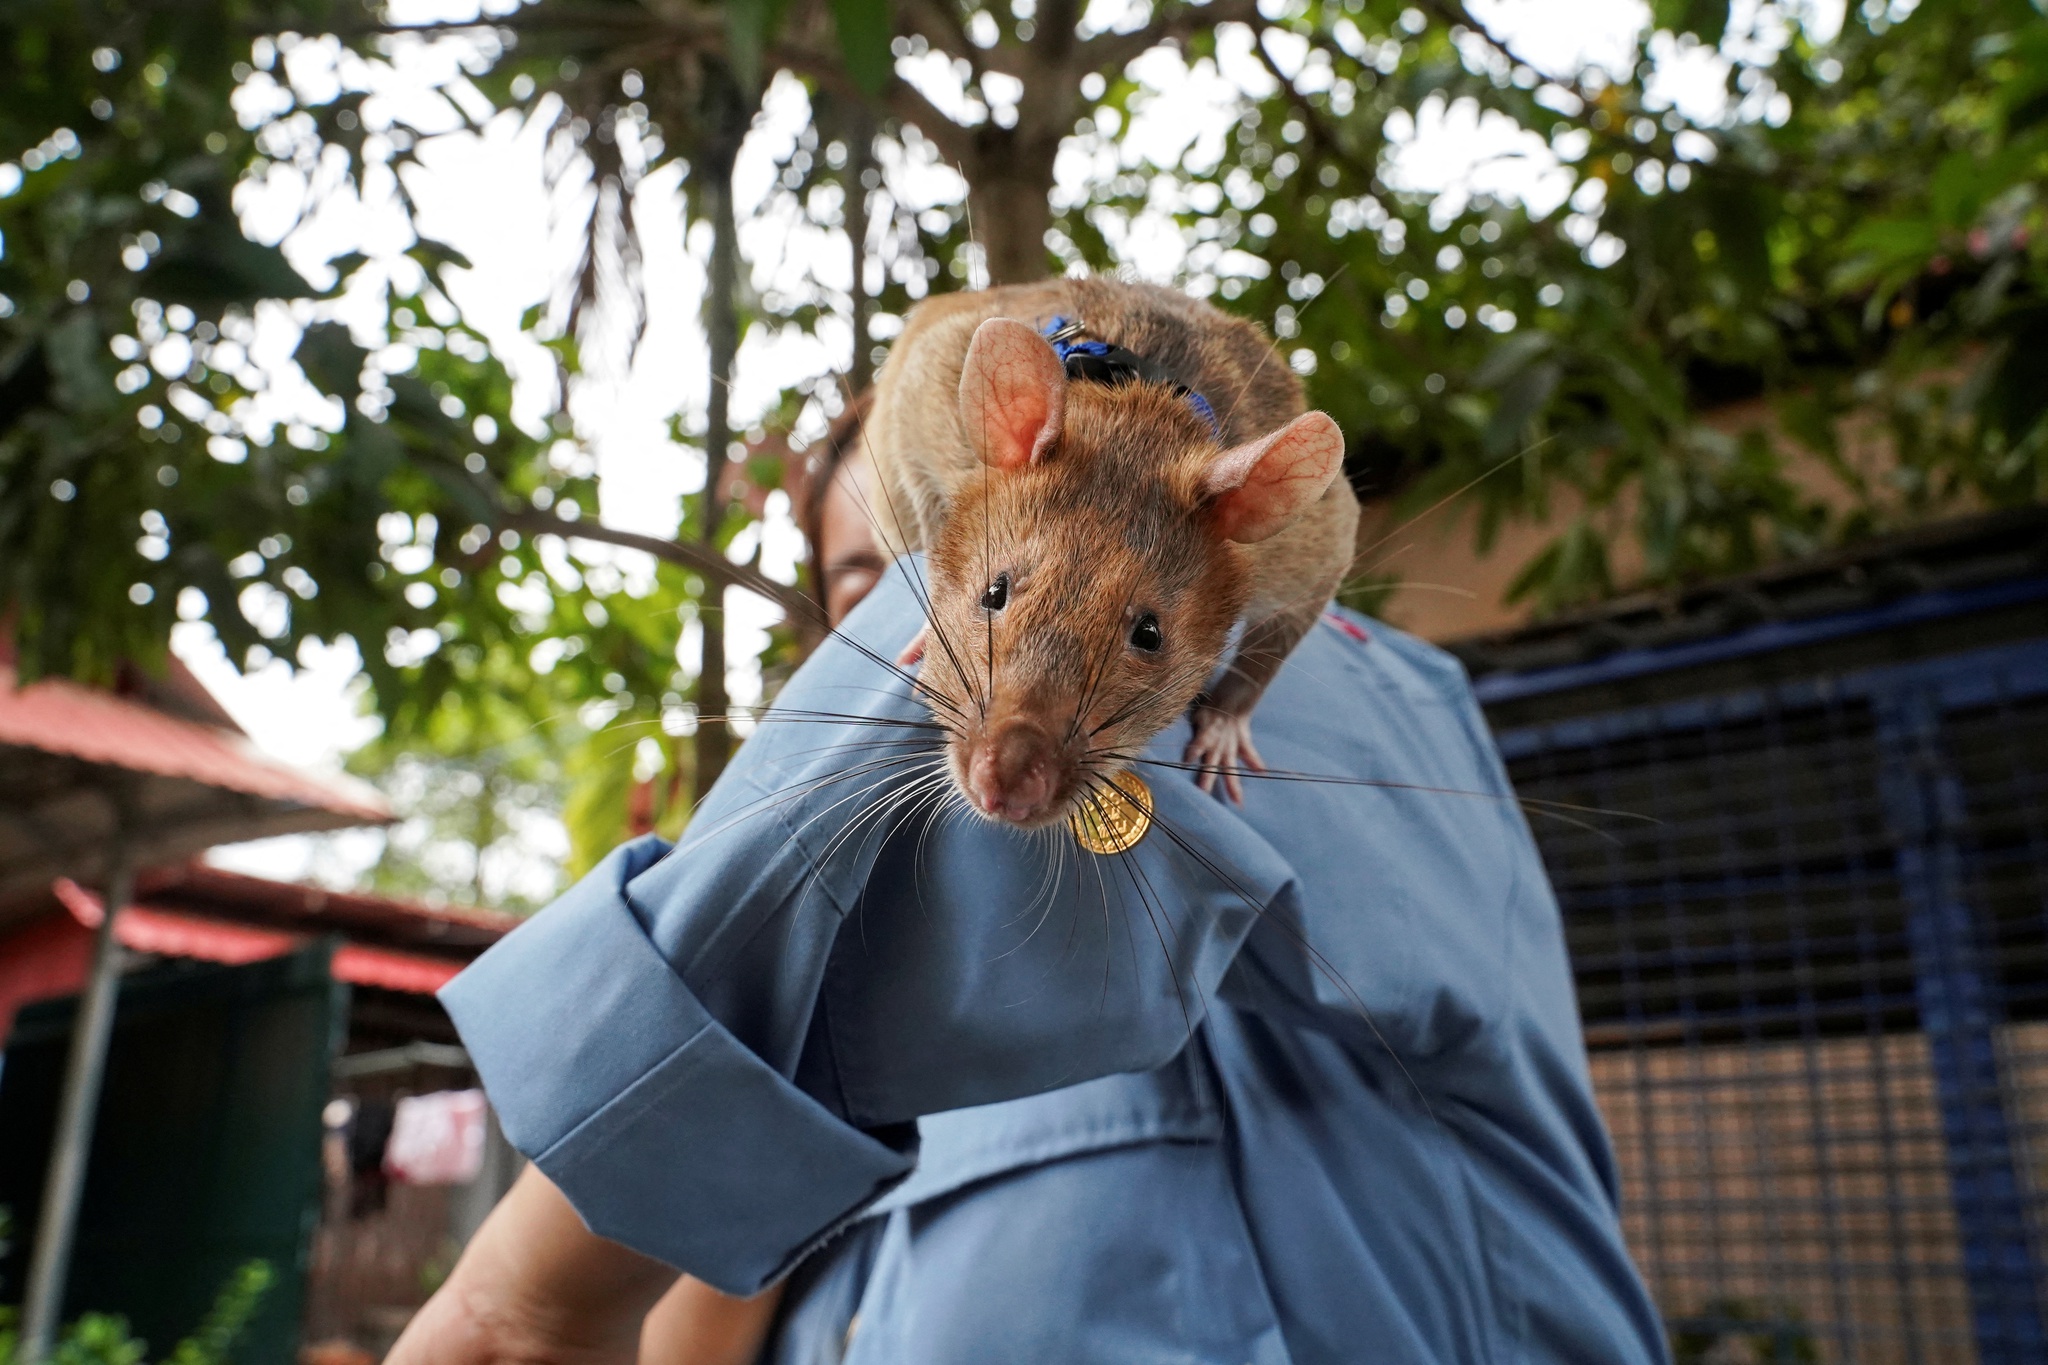 Magawa, o rato 'herói' que detecta minas terrestres se aposenta com honras  no Camboja - BBC News Brasil